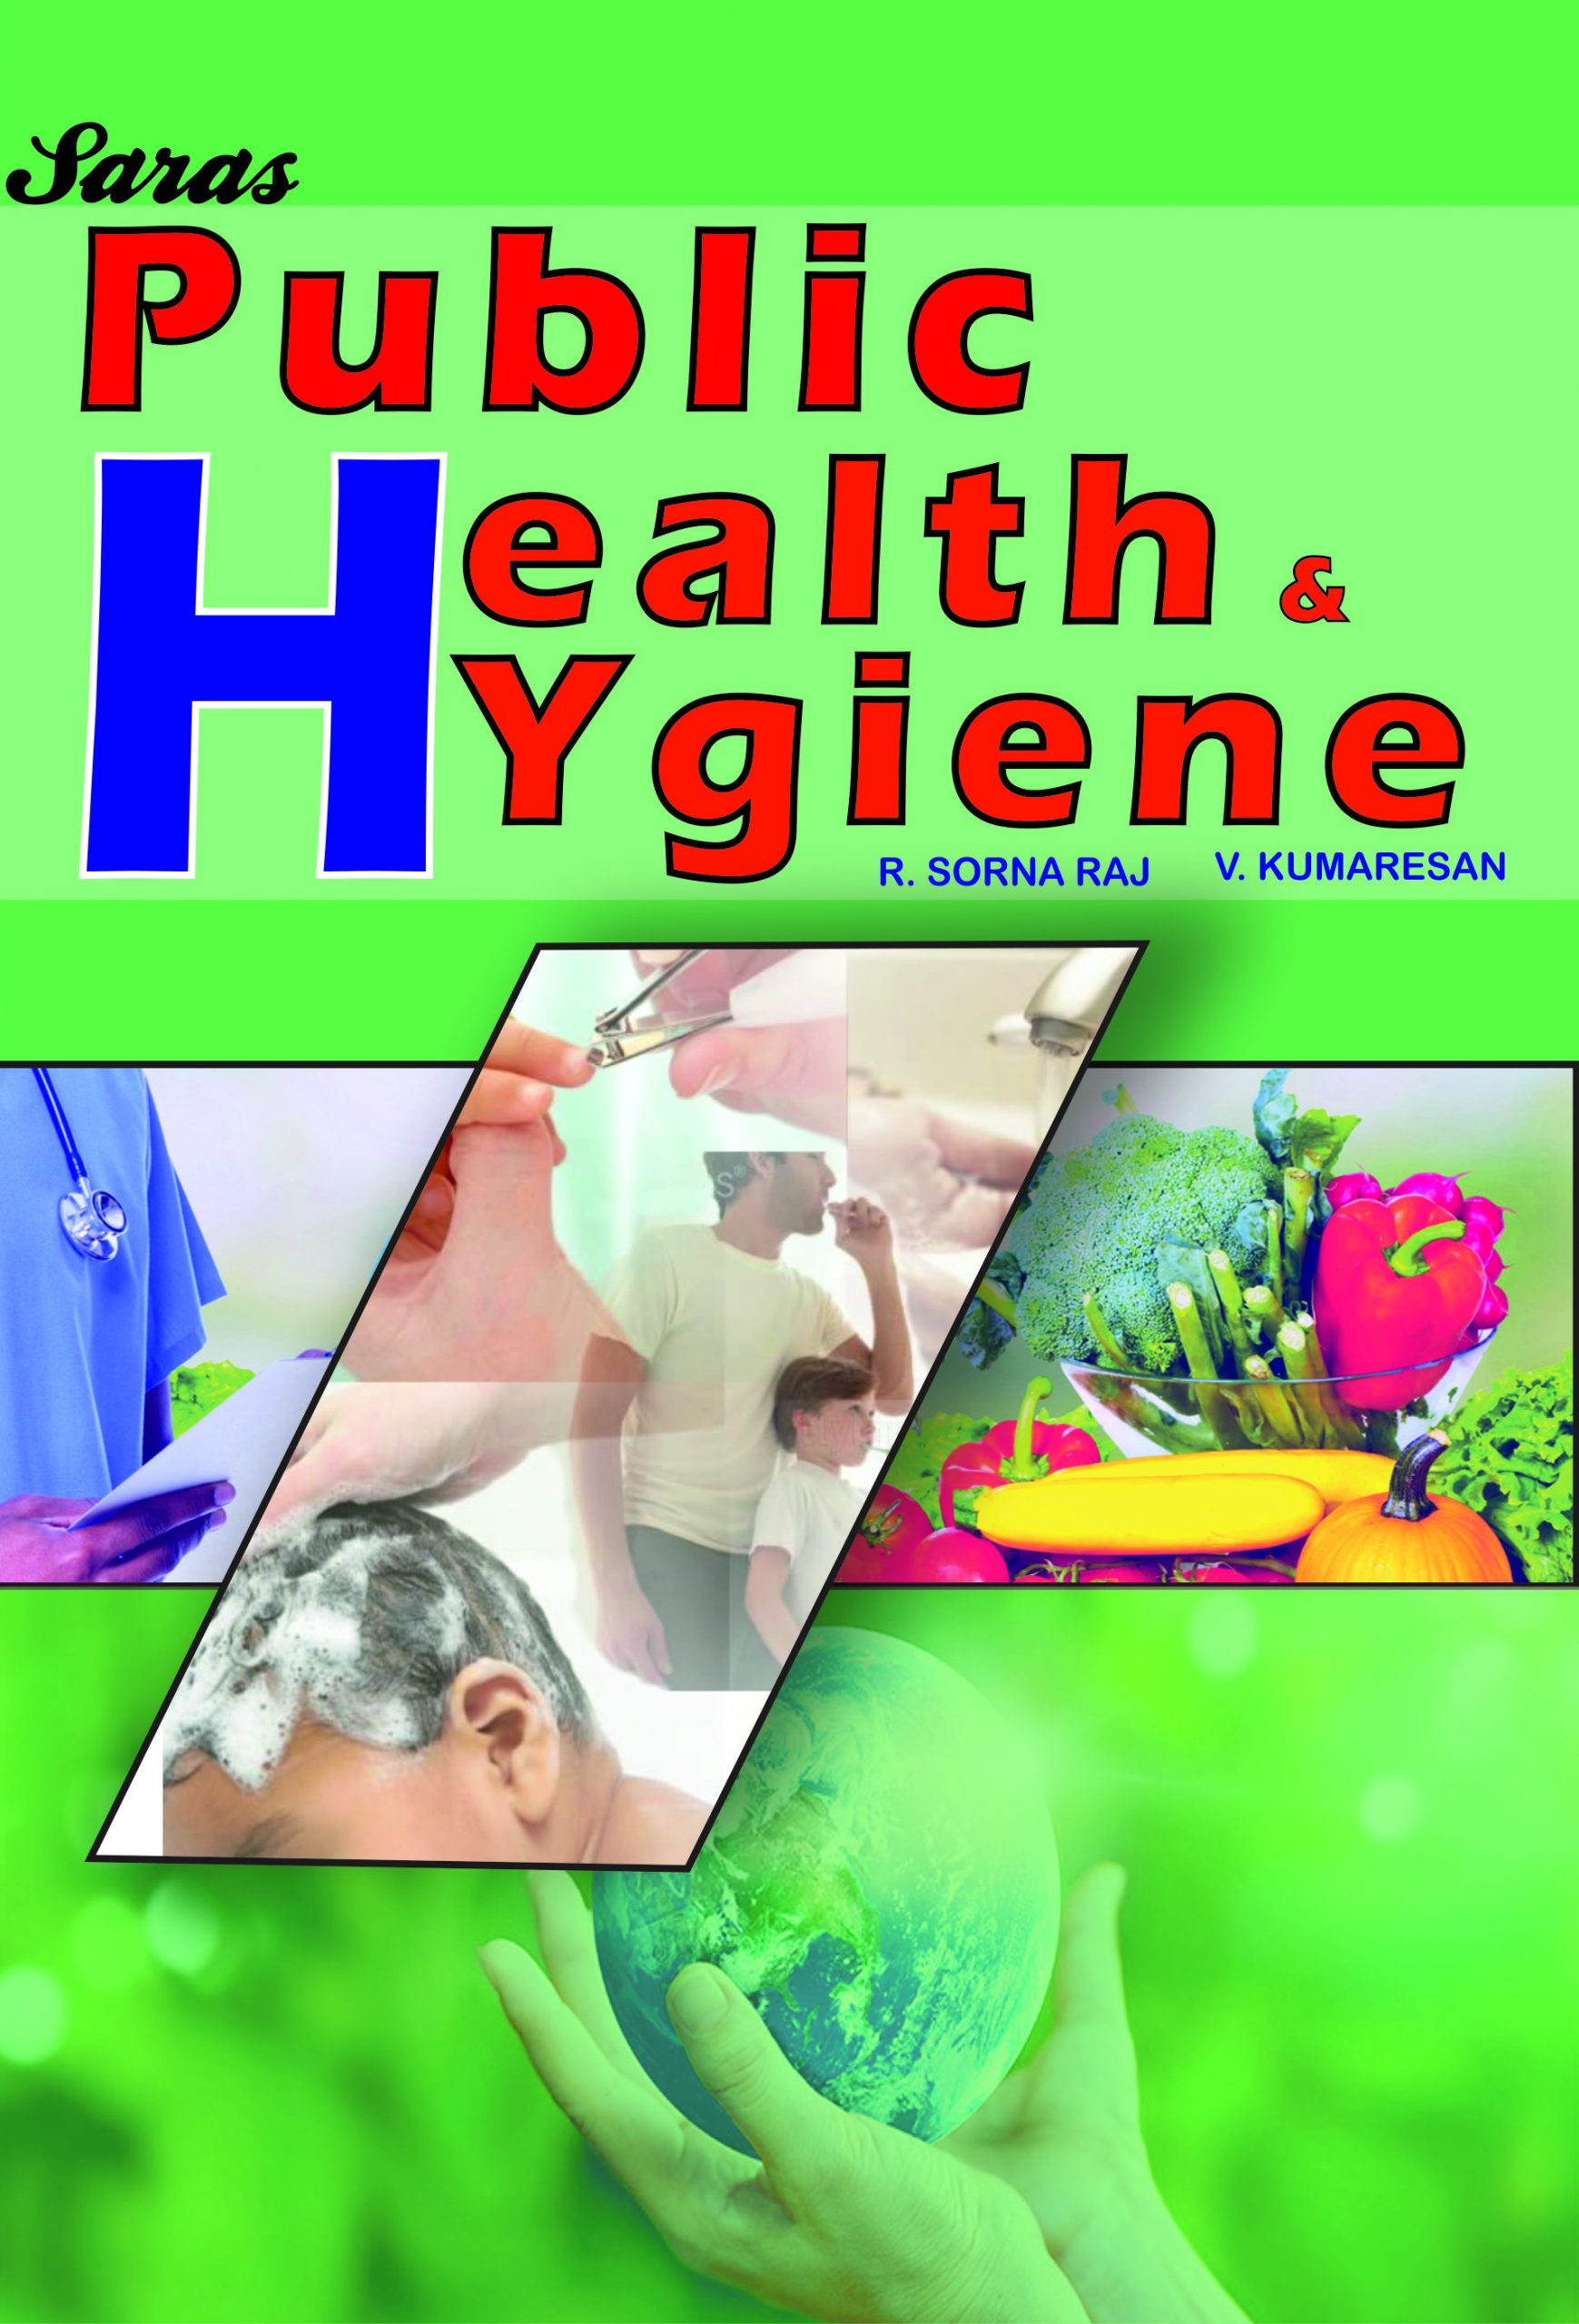 Public Health and Hygiene